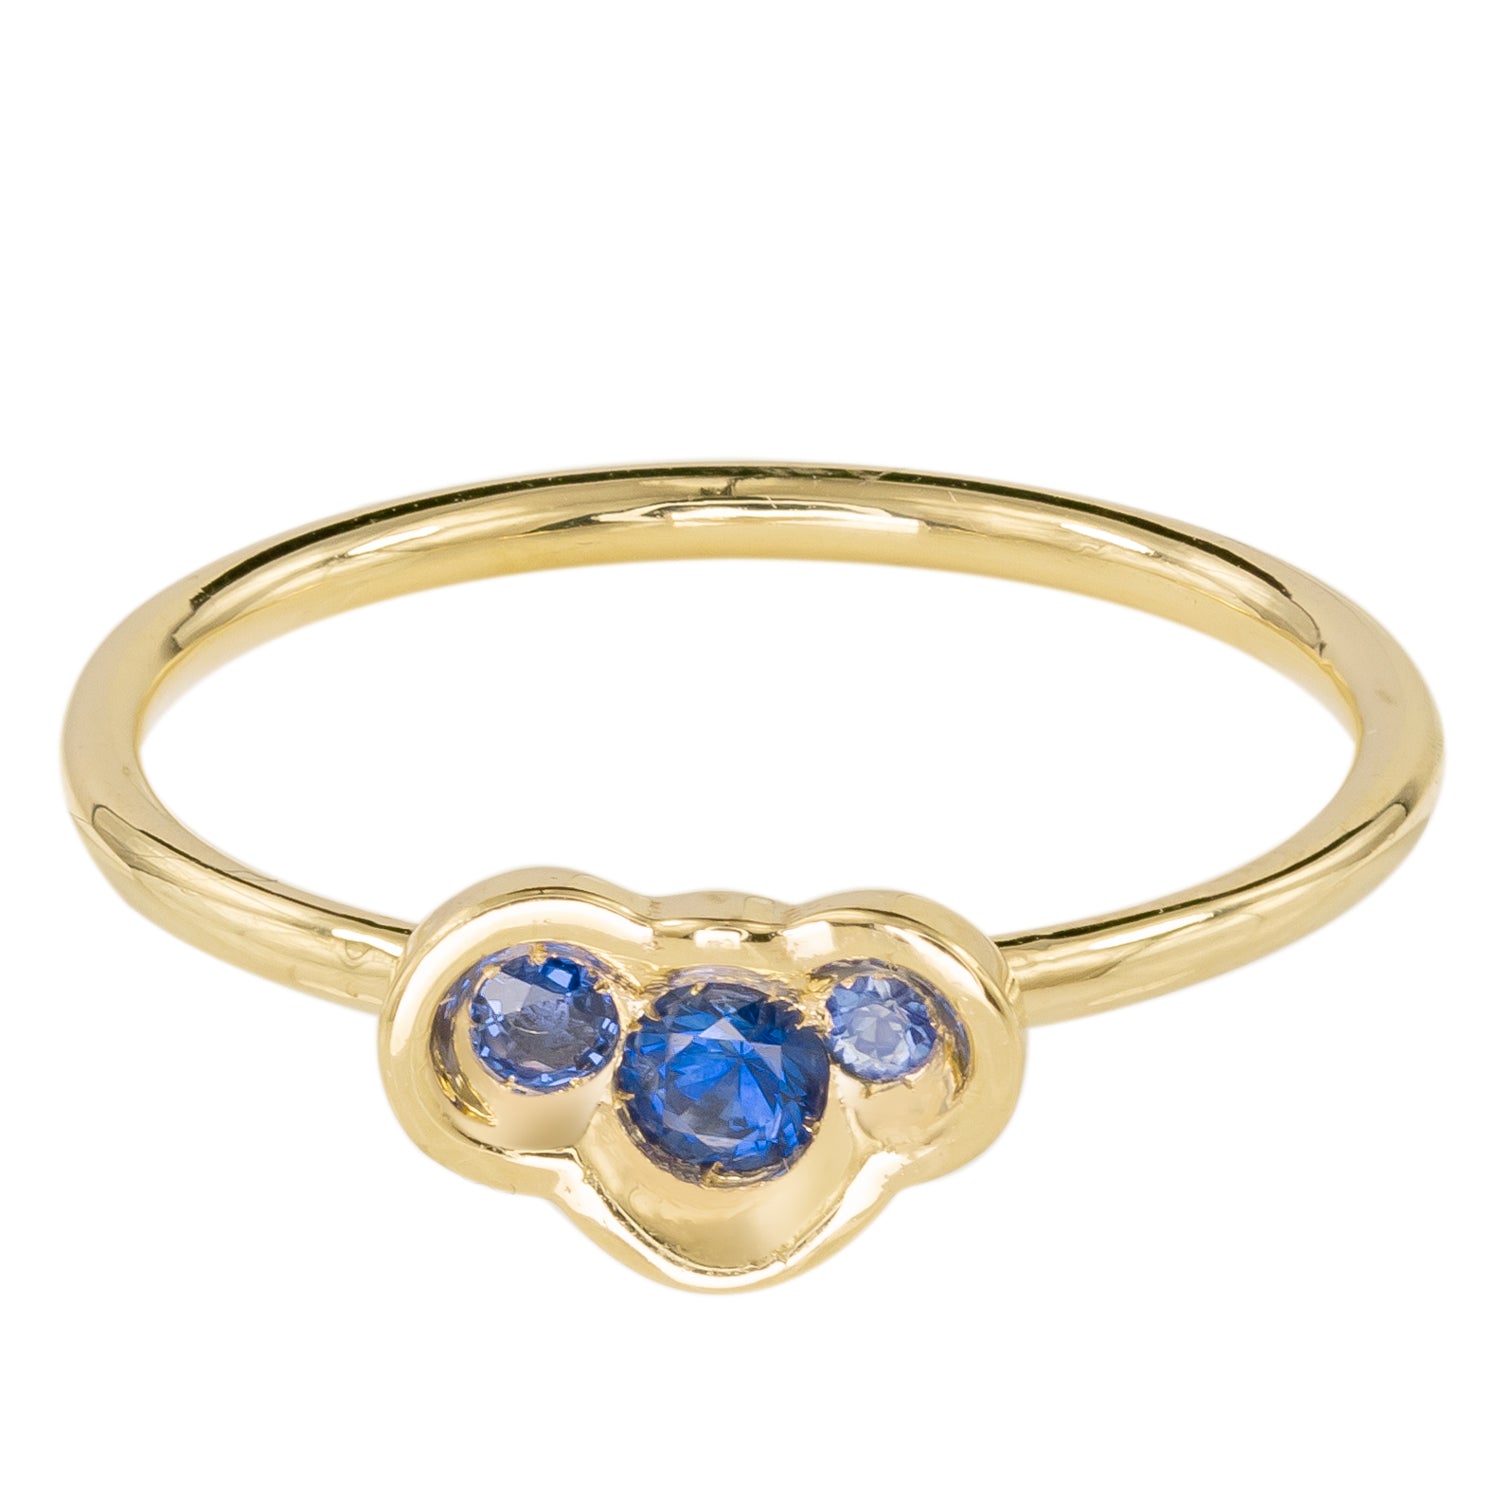 Blue Sapphire OBI ring #4 - Kay Konecna Studio